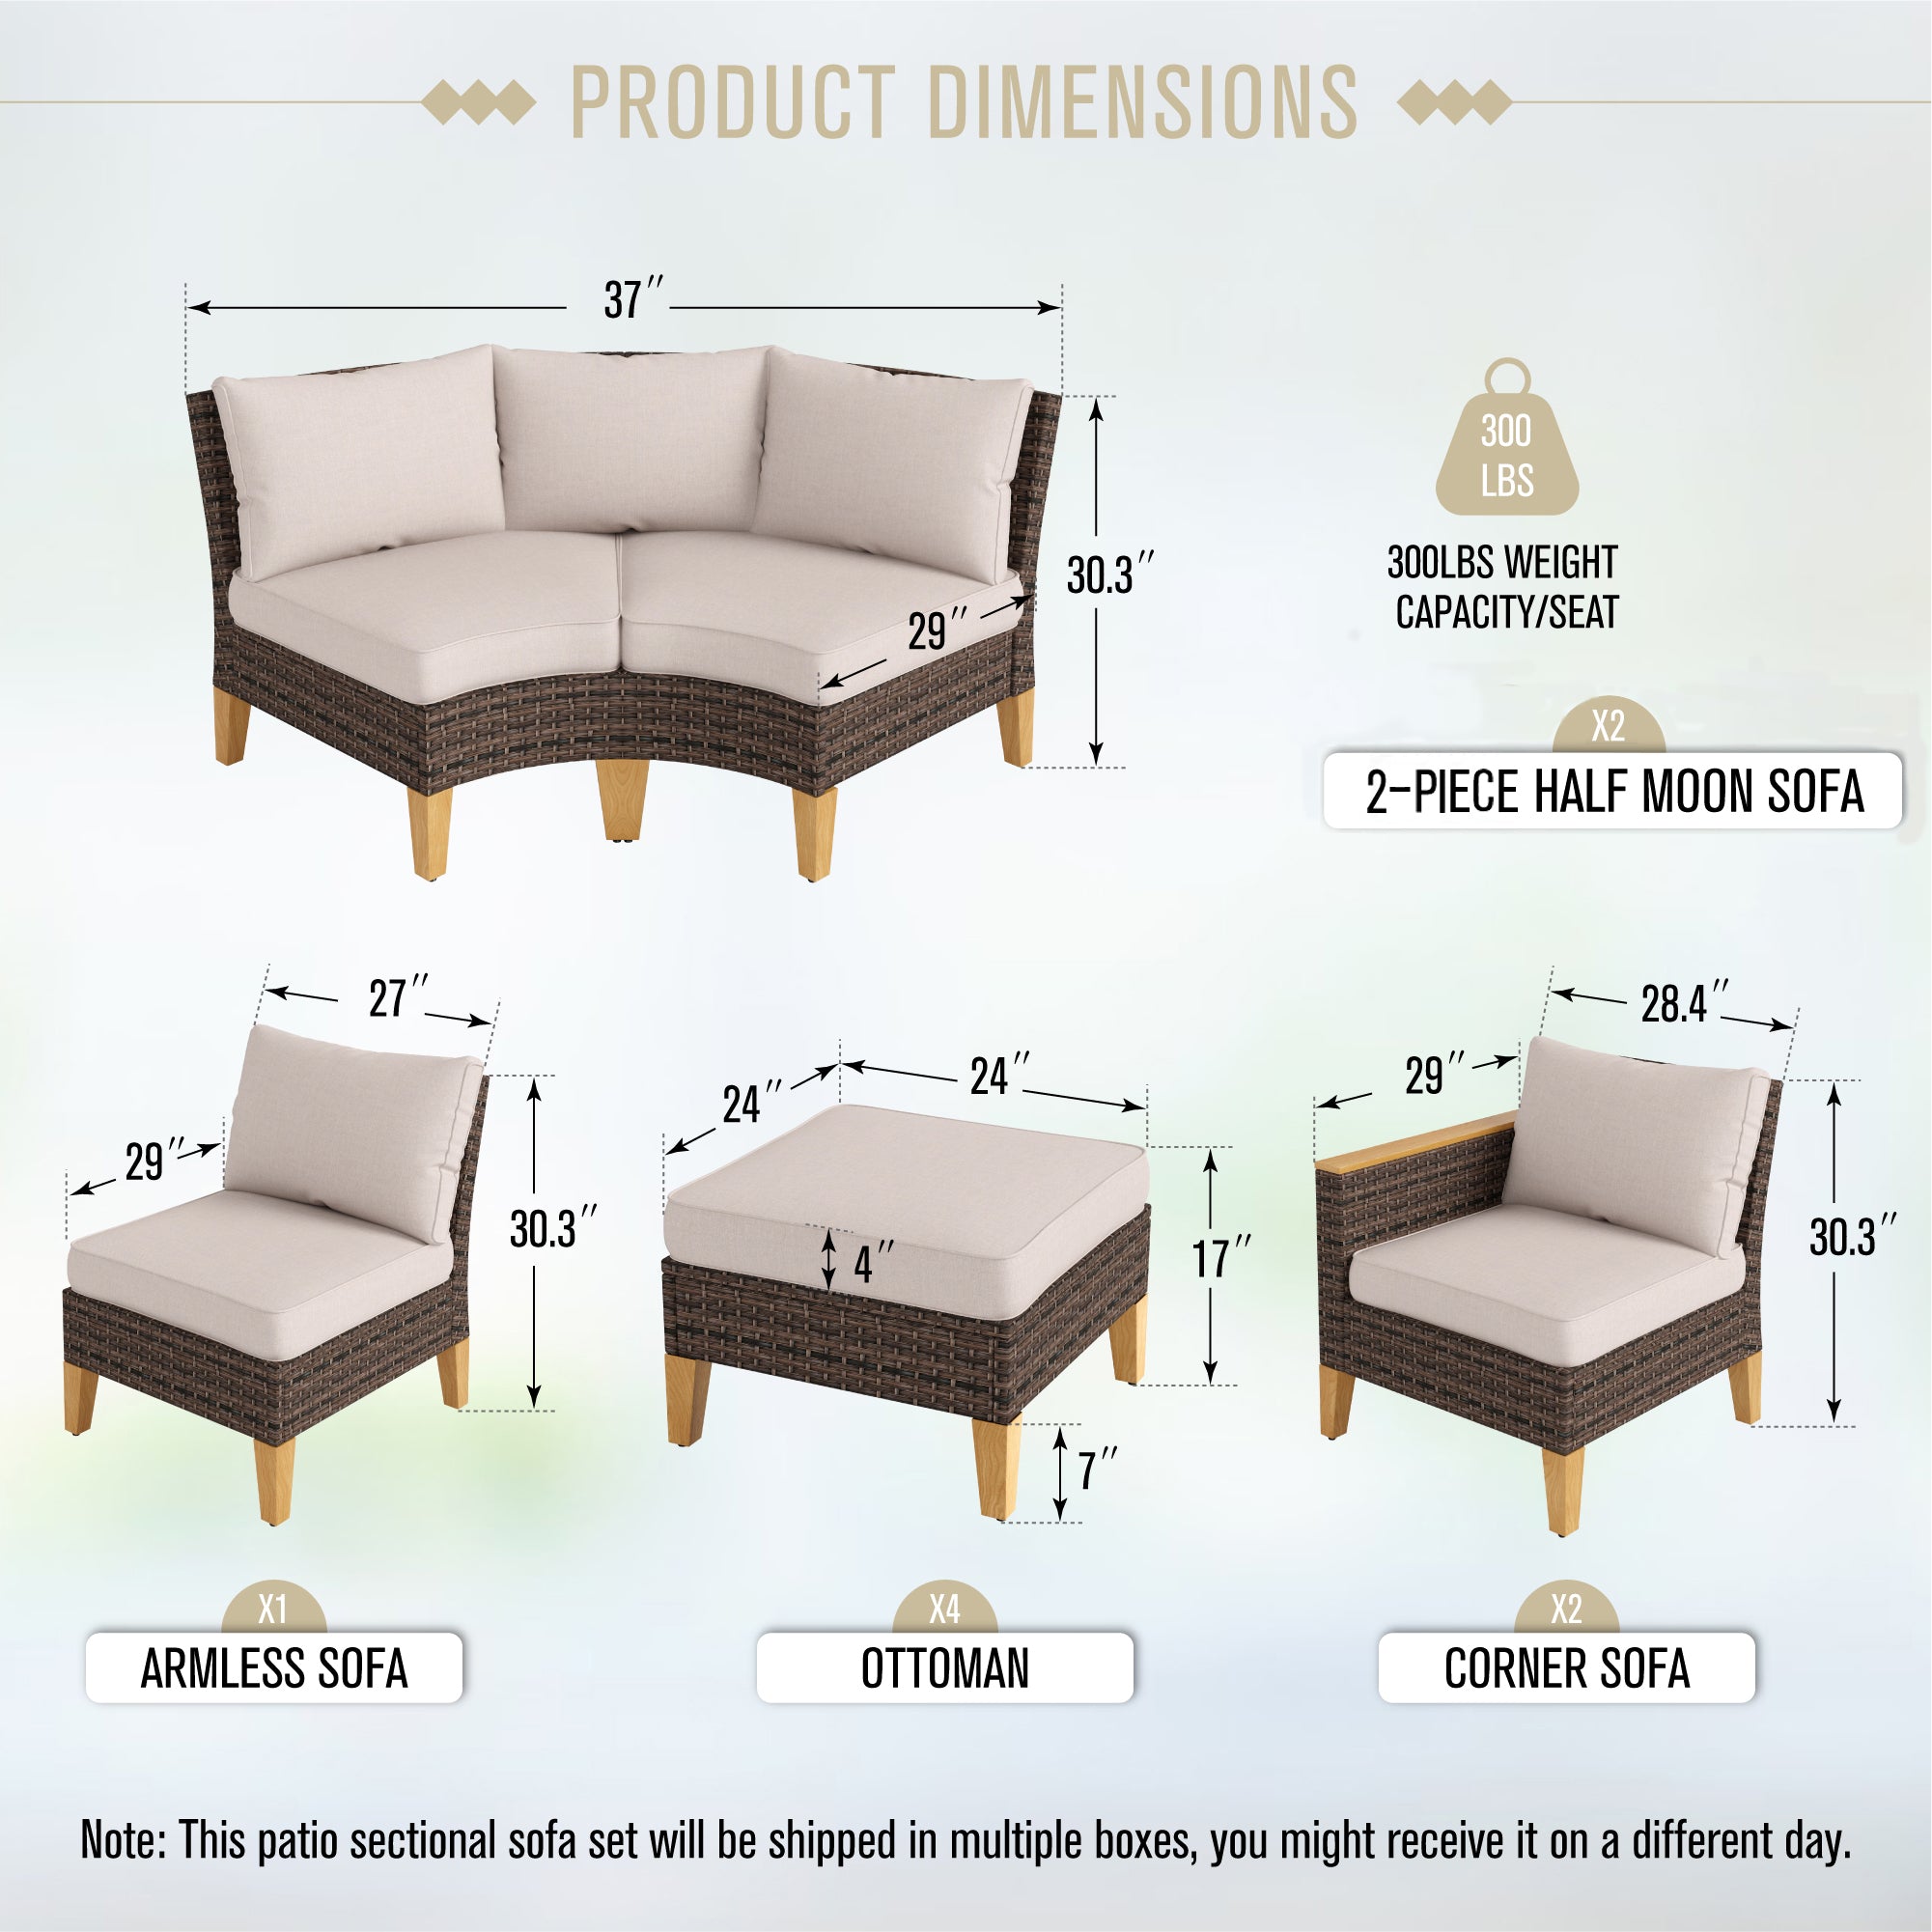 PHI VILLA 11-Piece Rattan Half-Moon Curved Luxury Outdoor Sofa Sectional